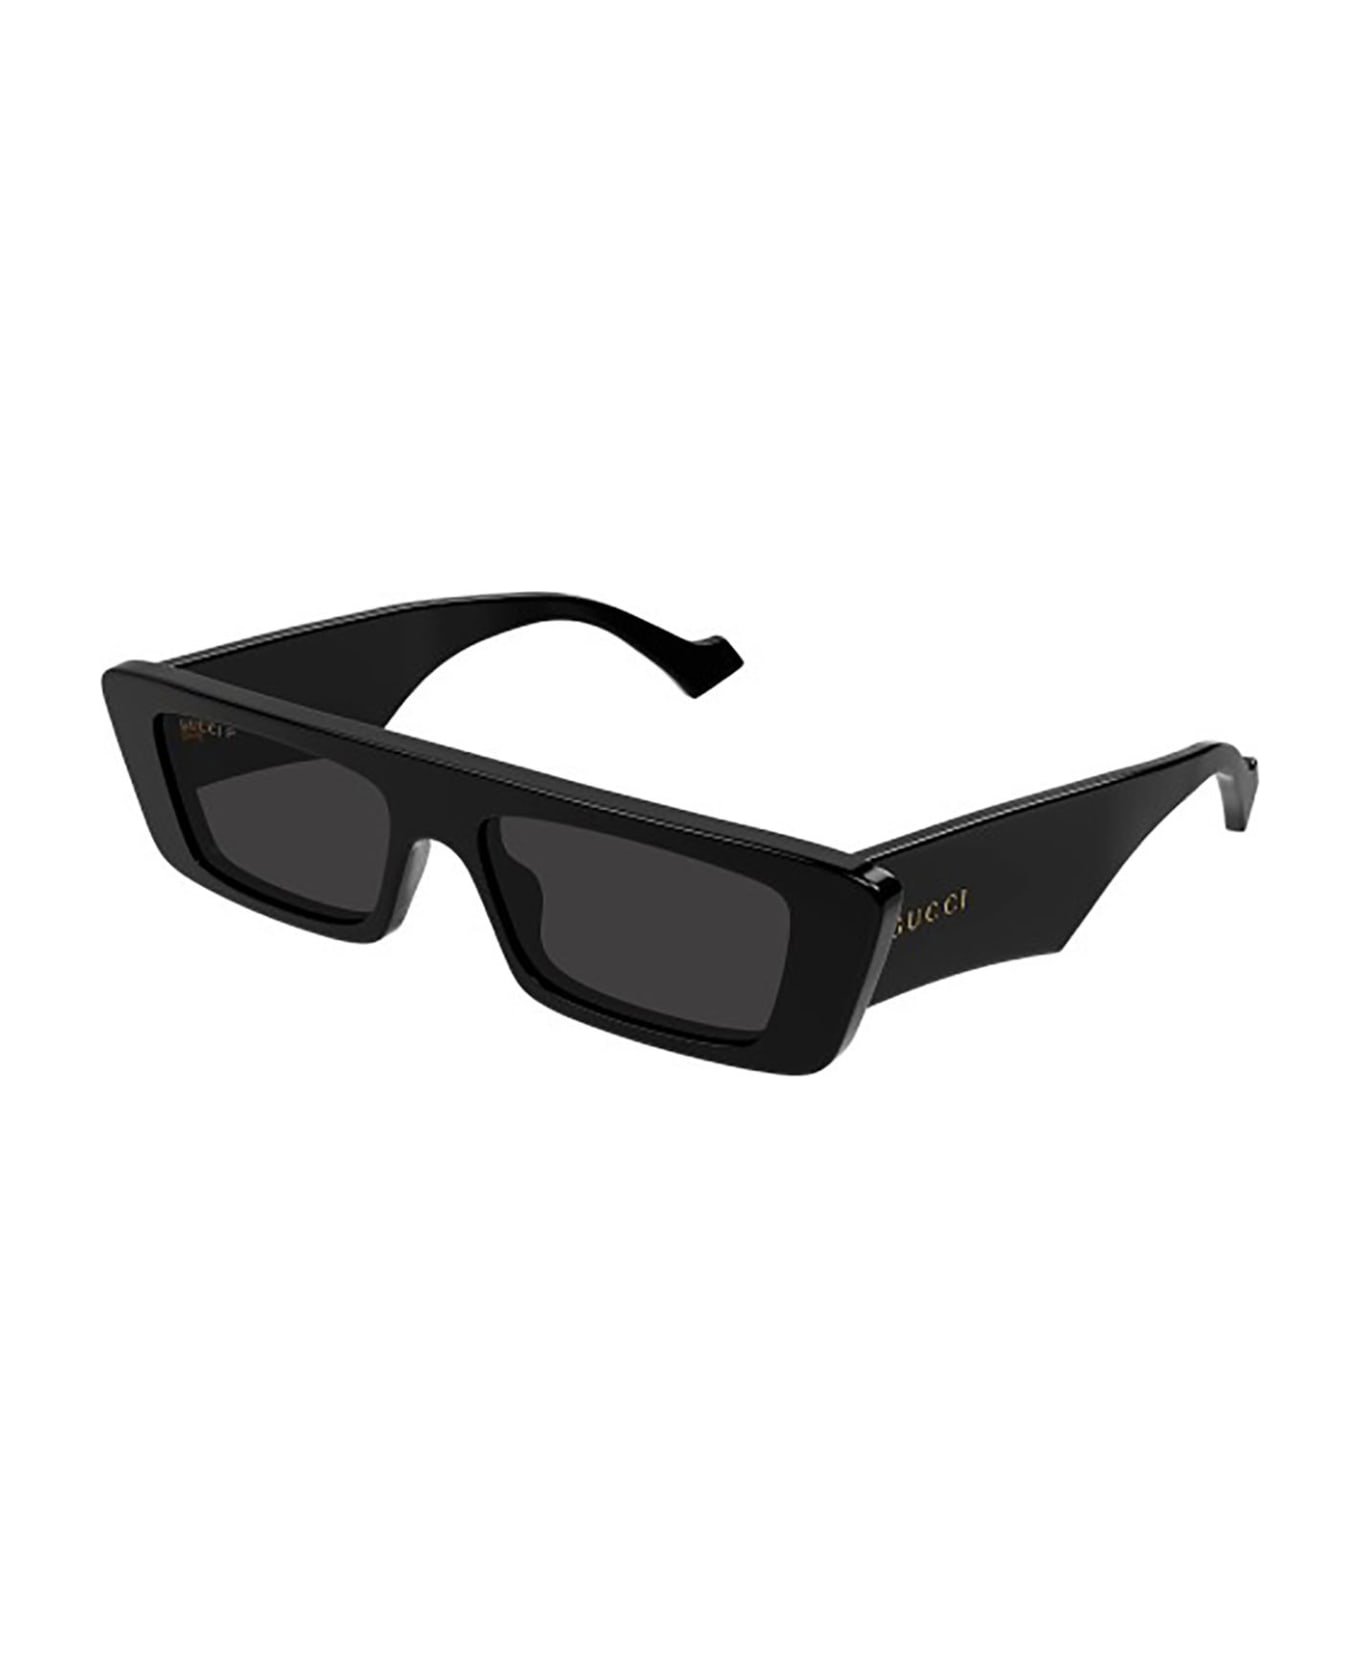 Gucci Eyewear GG1331S Sunglasses - Black Black Brown